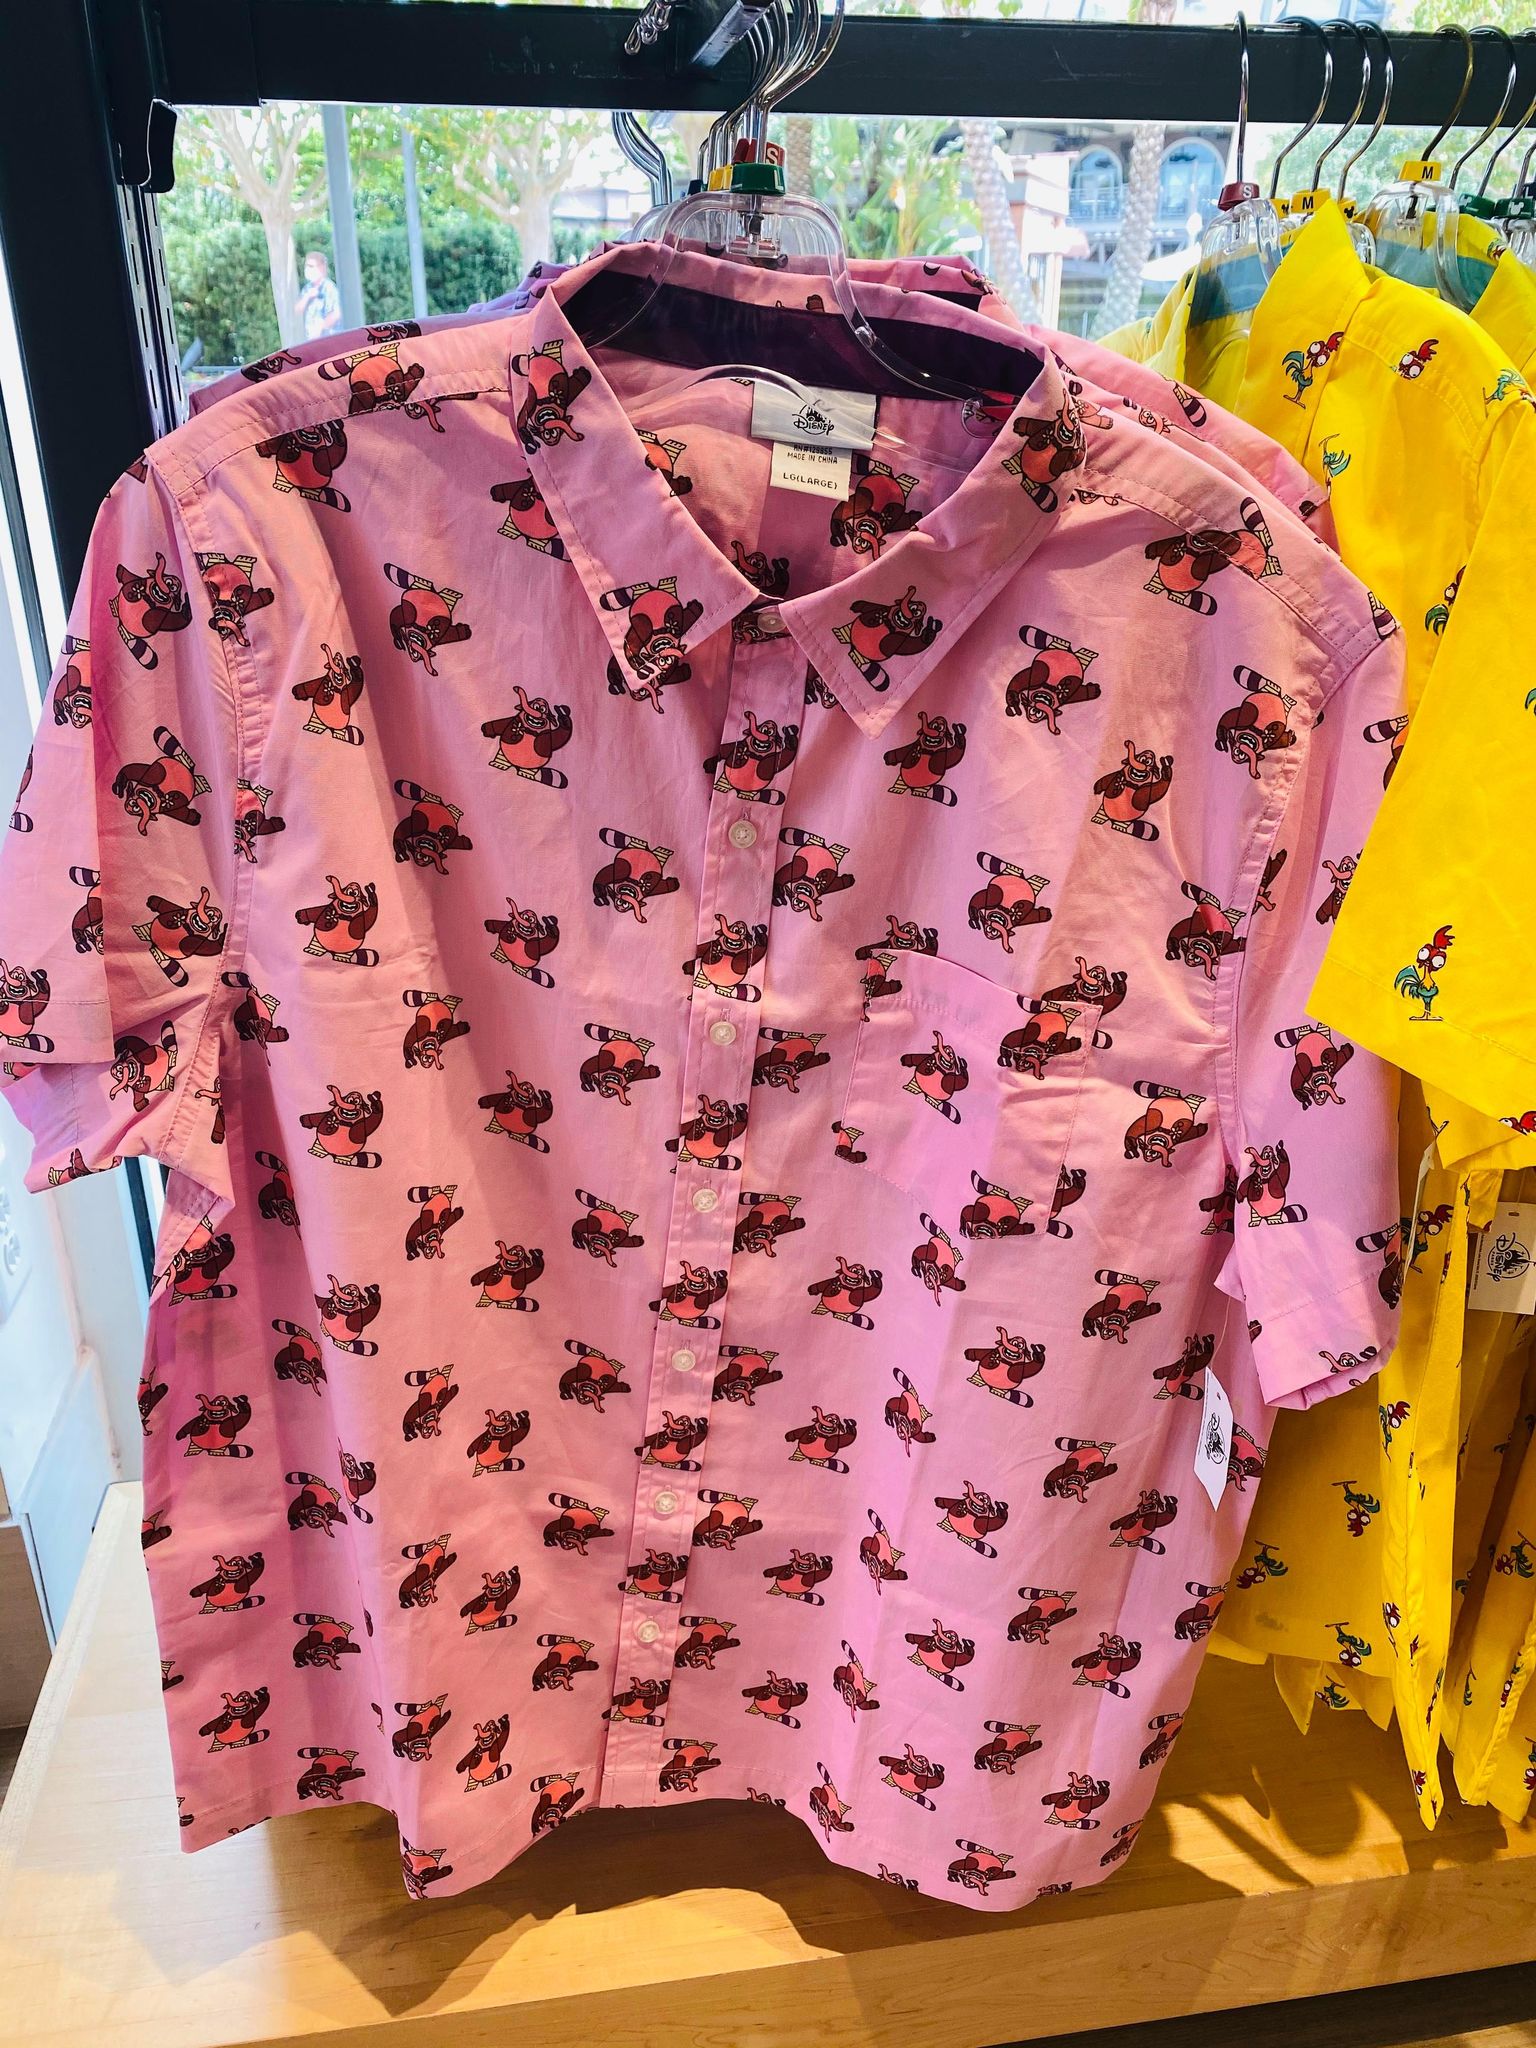 New Bing Bong Shirt Spotted at Disney Springs - Disney Fashion Blog